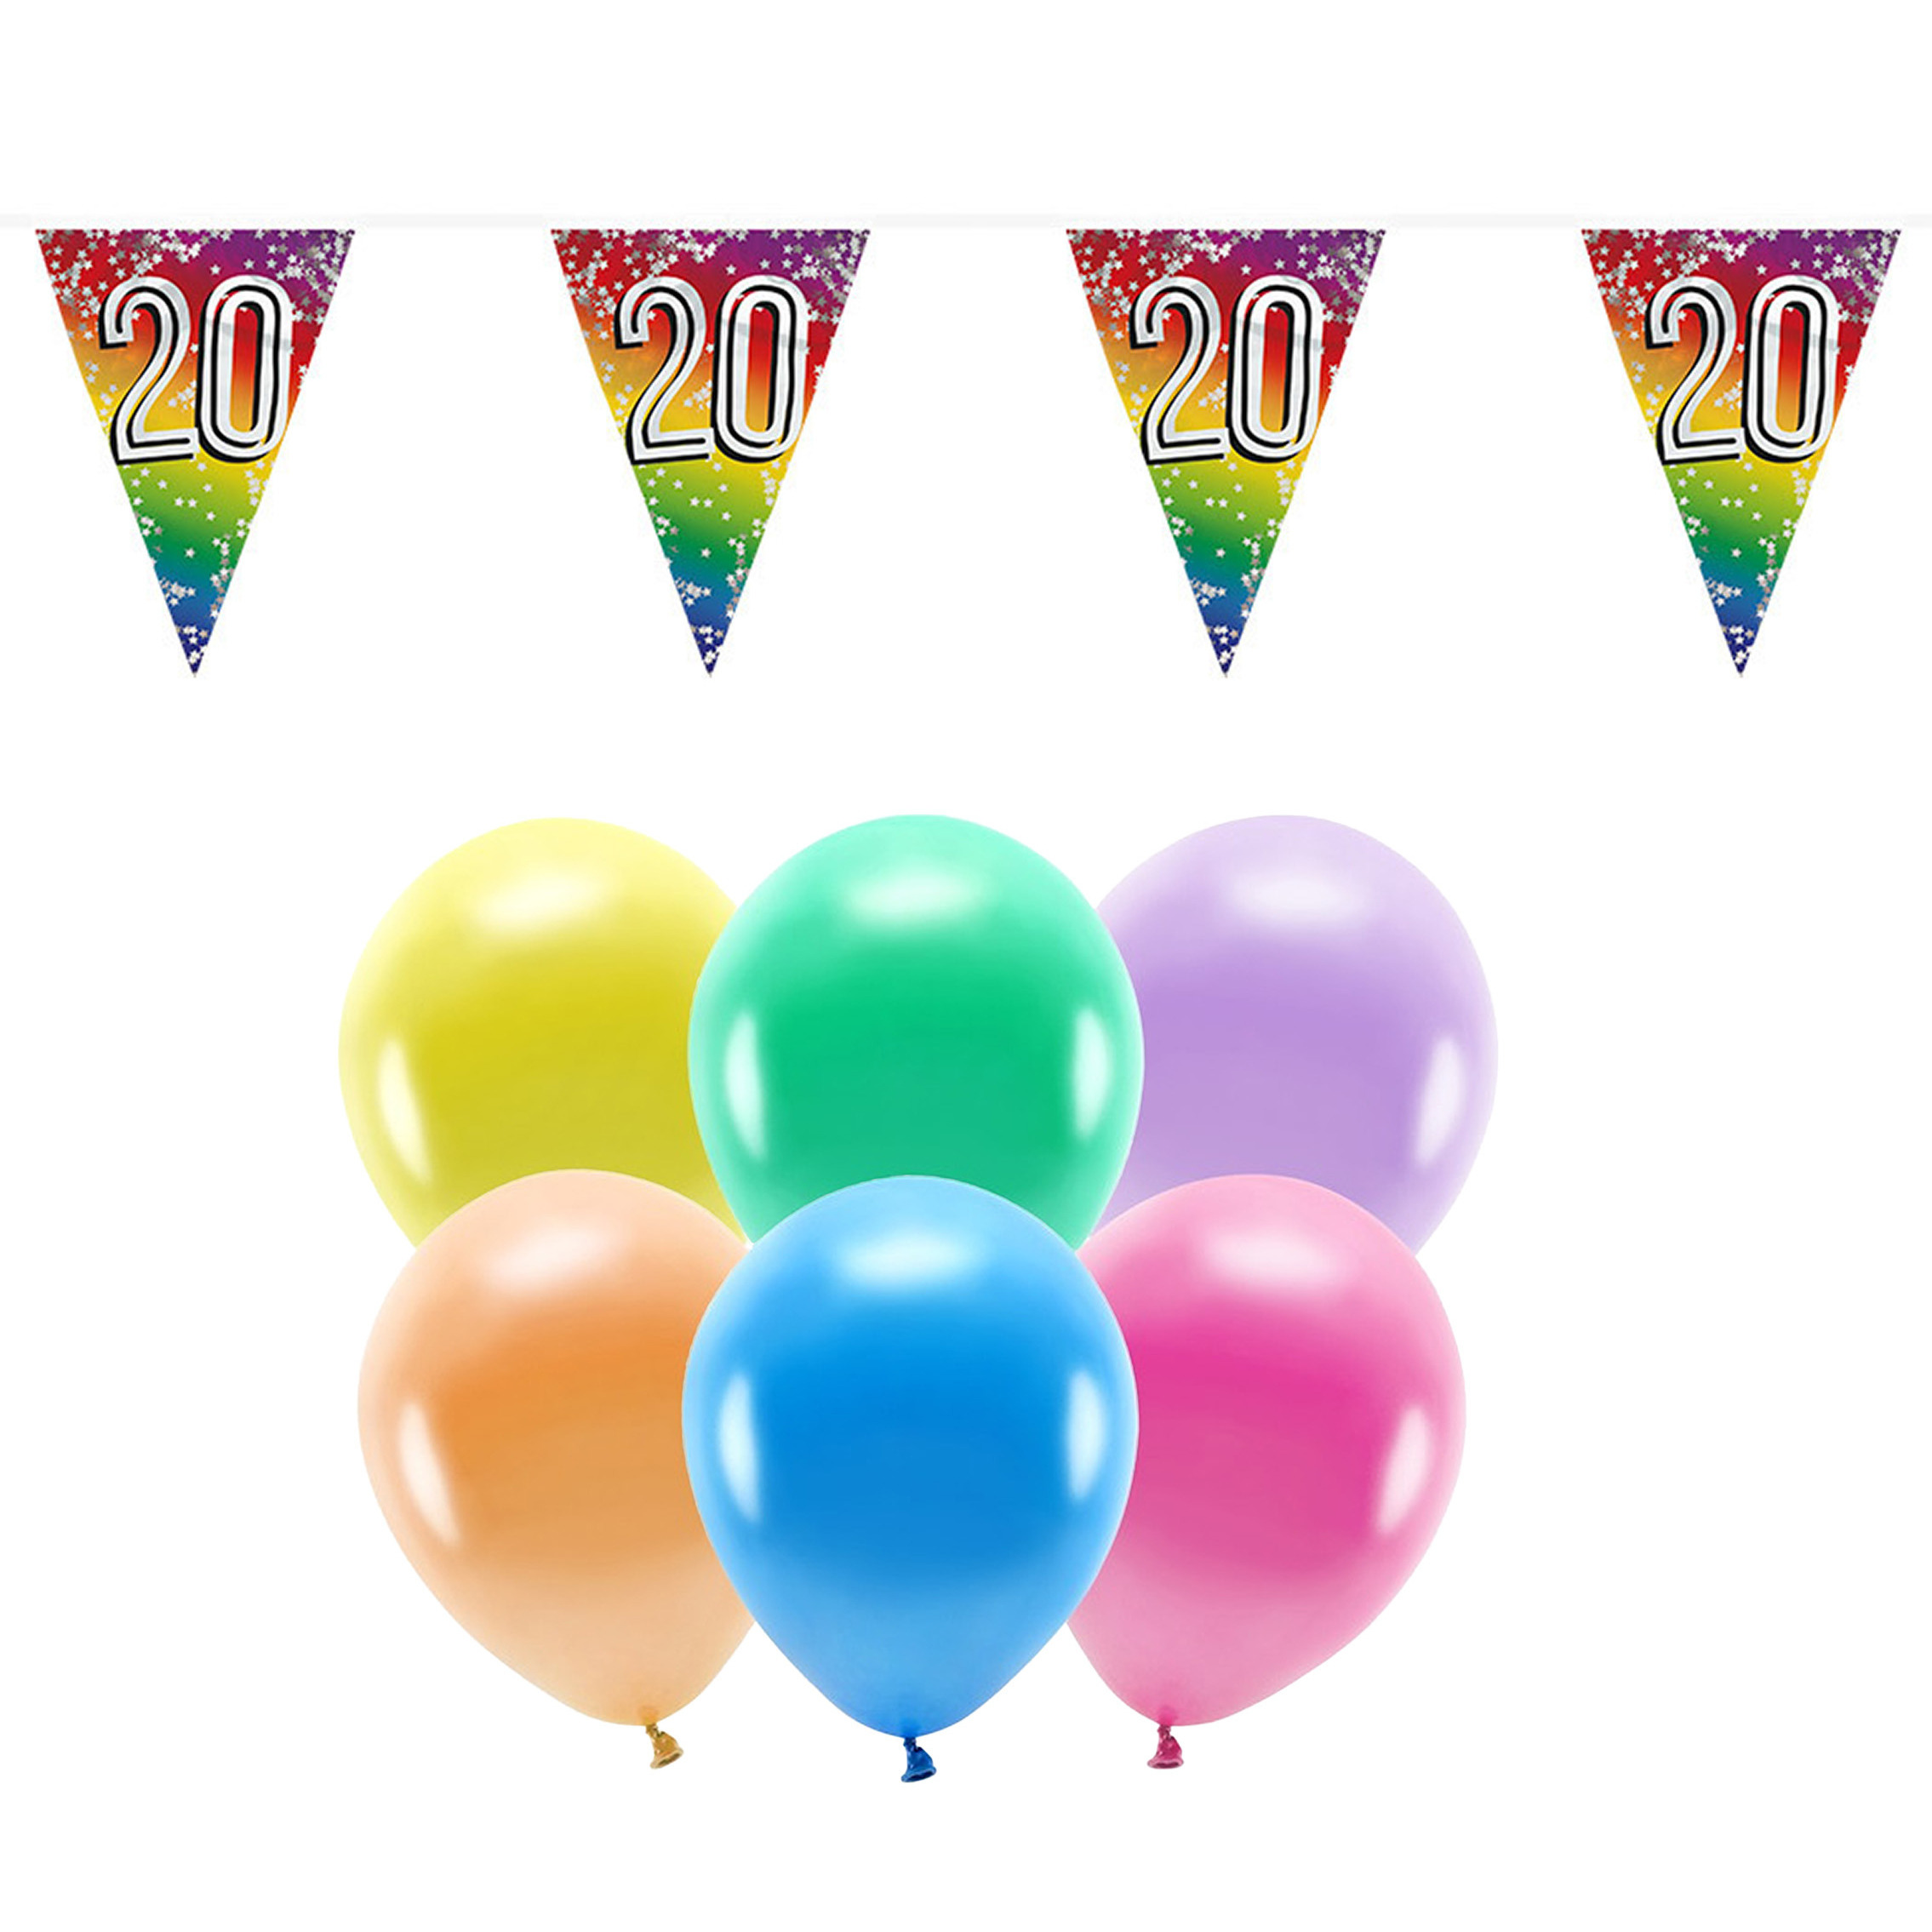 Boland Party 20e jaar verjaardag feest versieringen Ballonnen en vlaggetjes